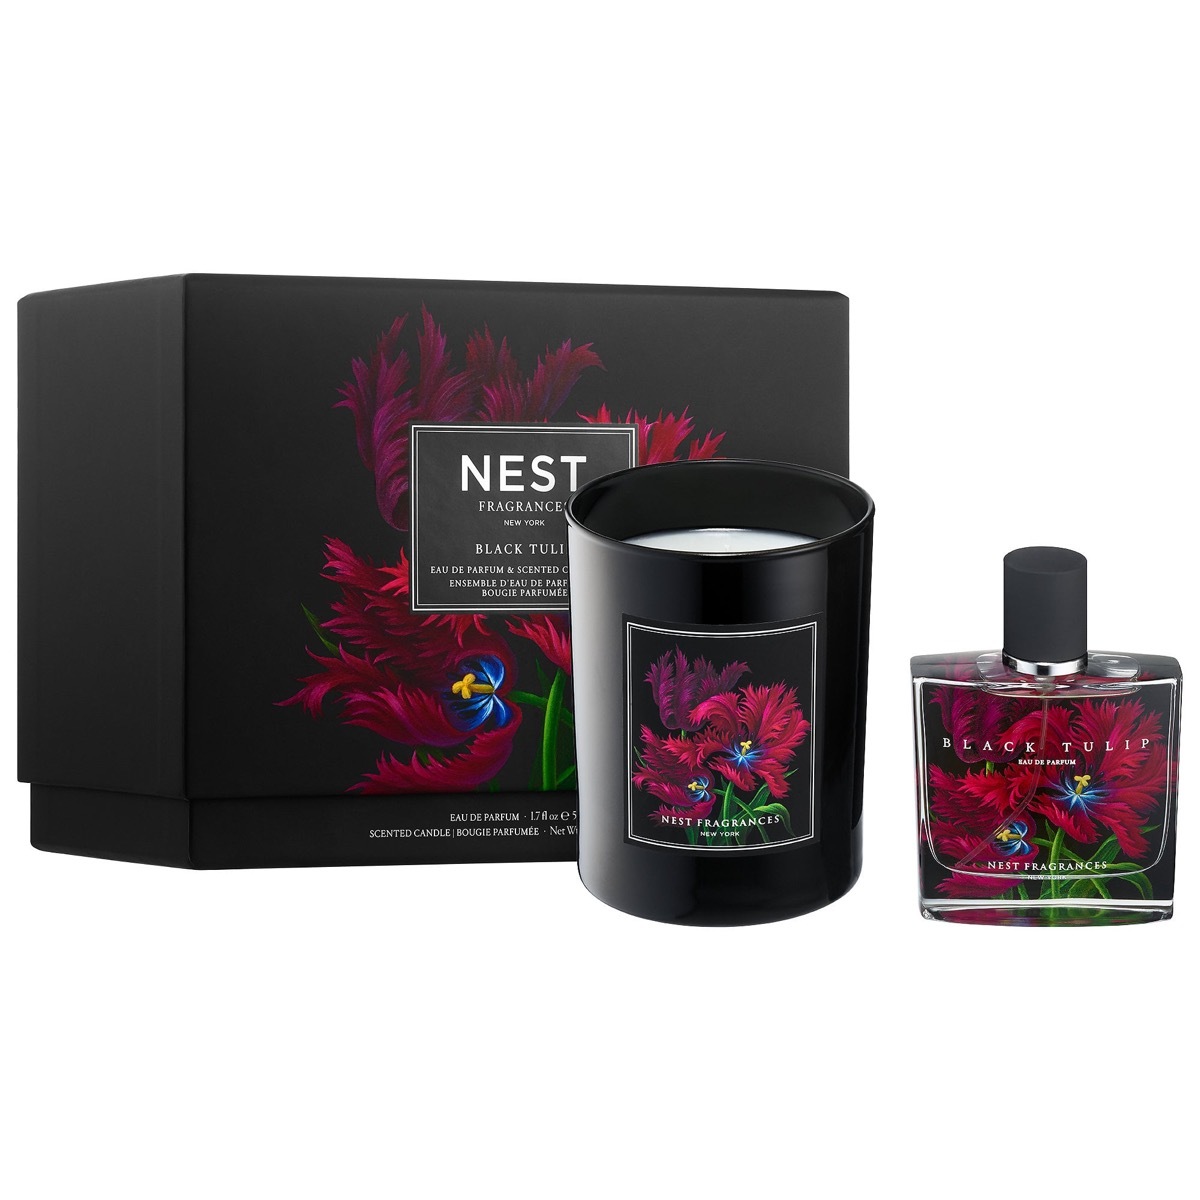 Nest fragrance and candle set, white background